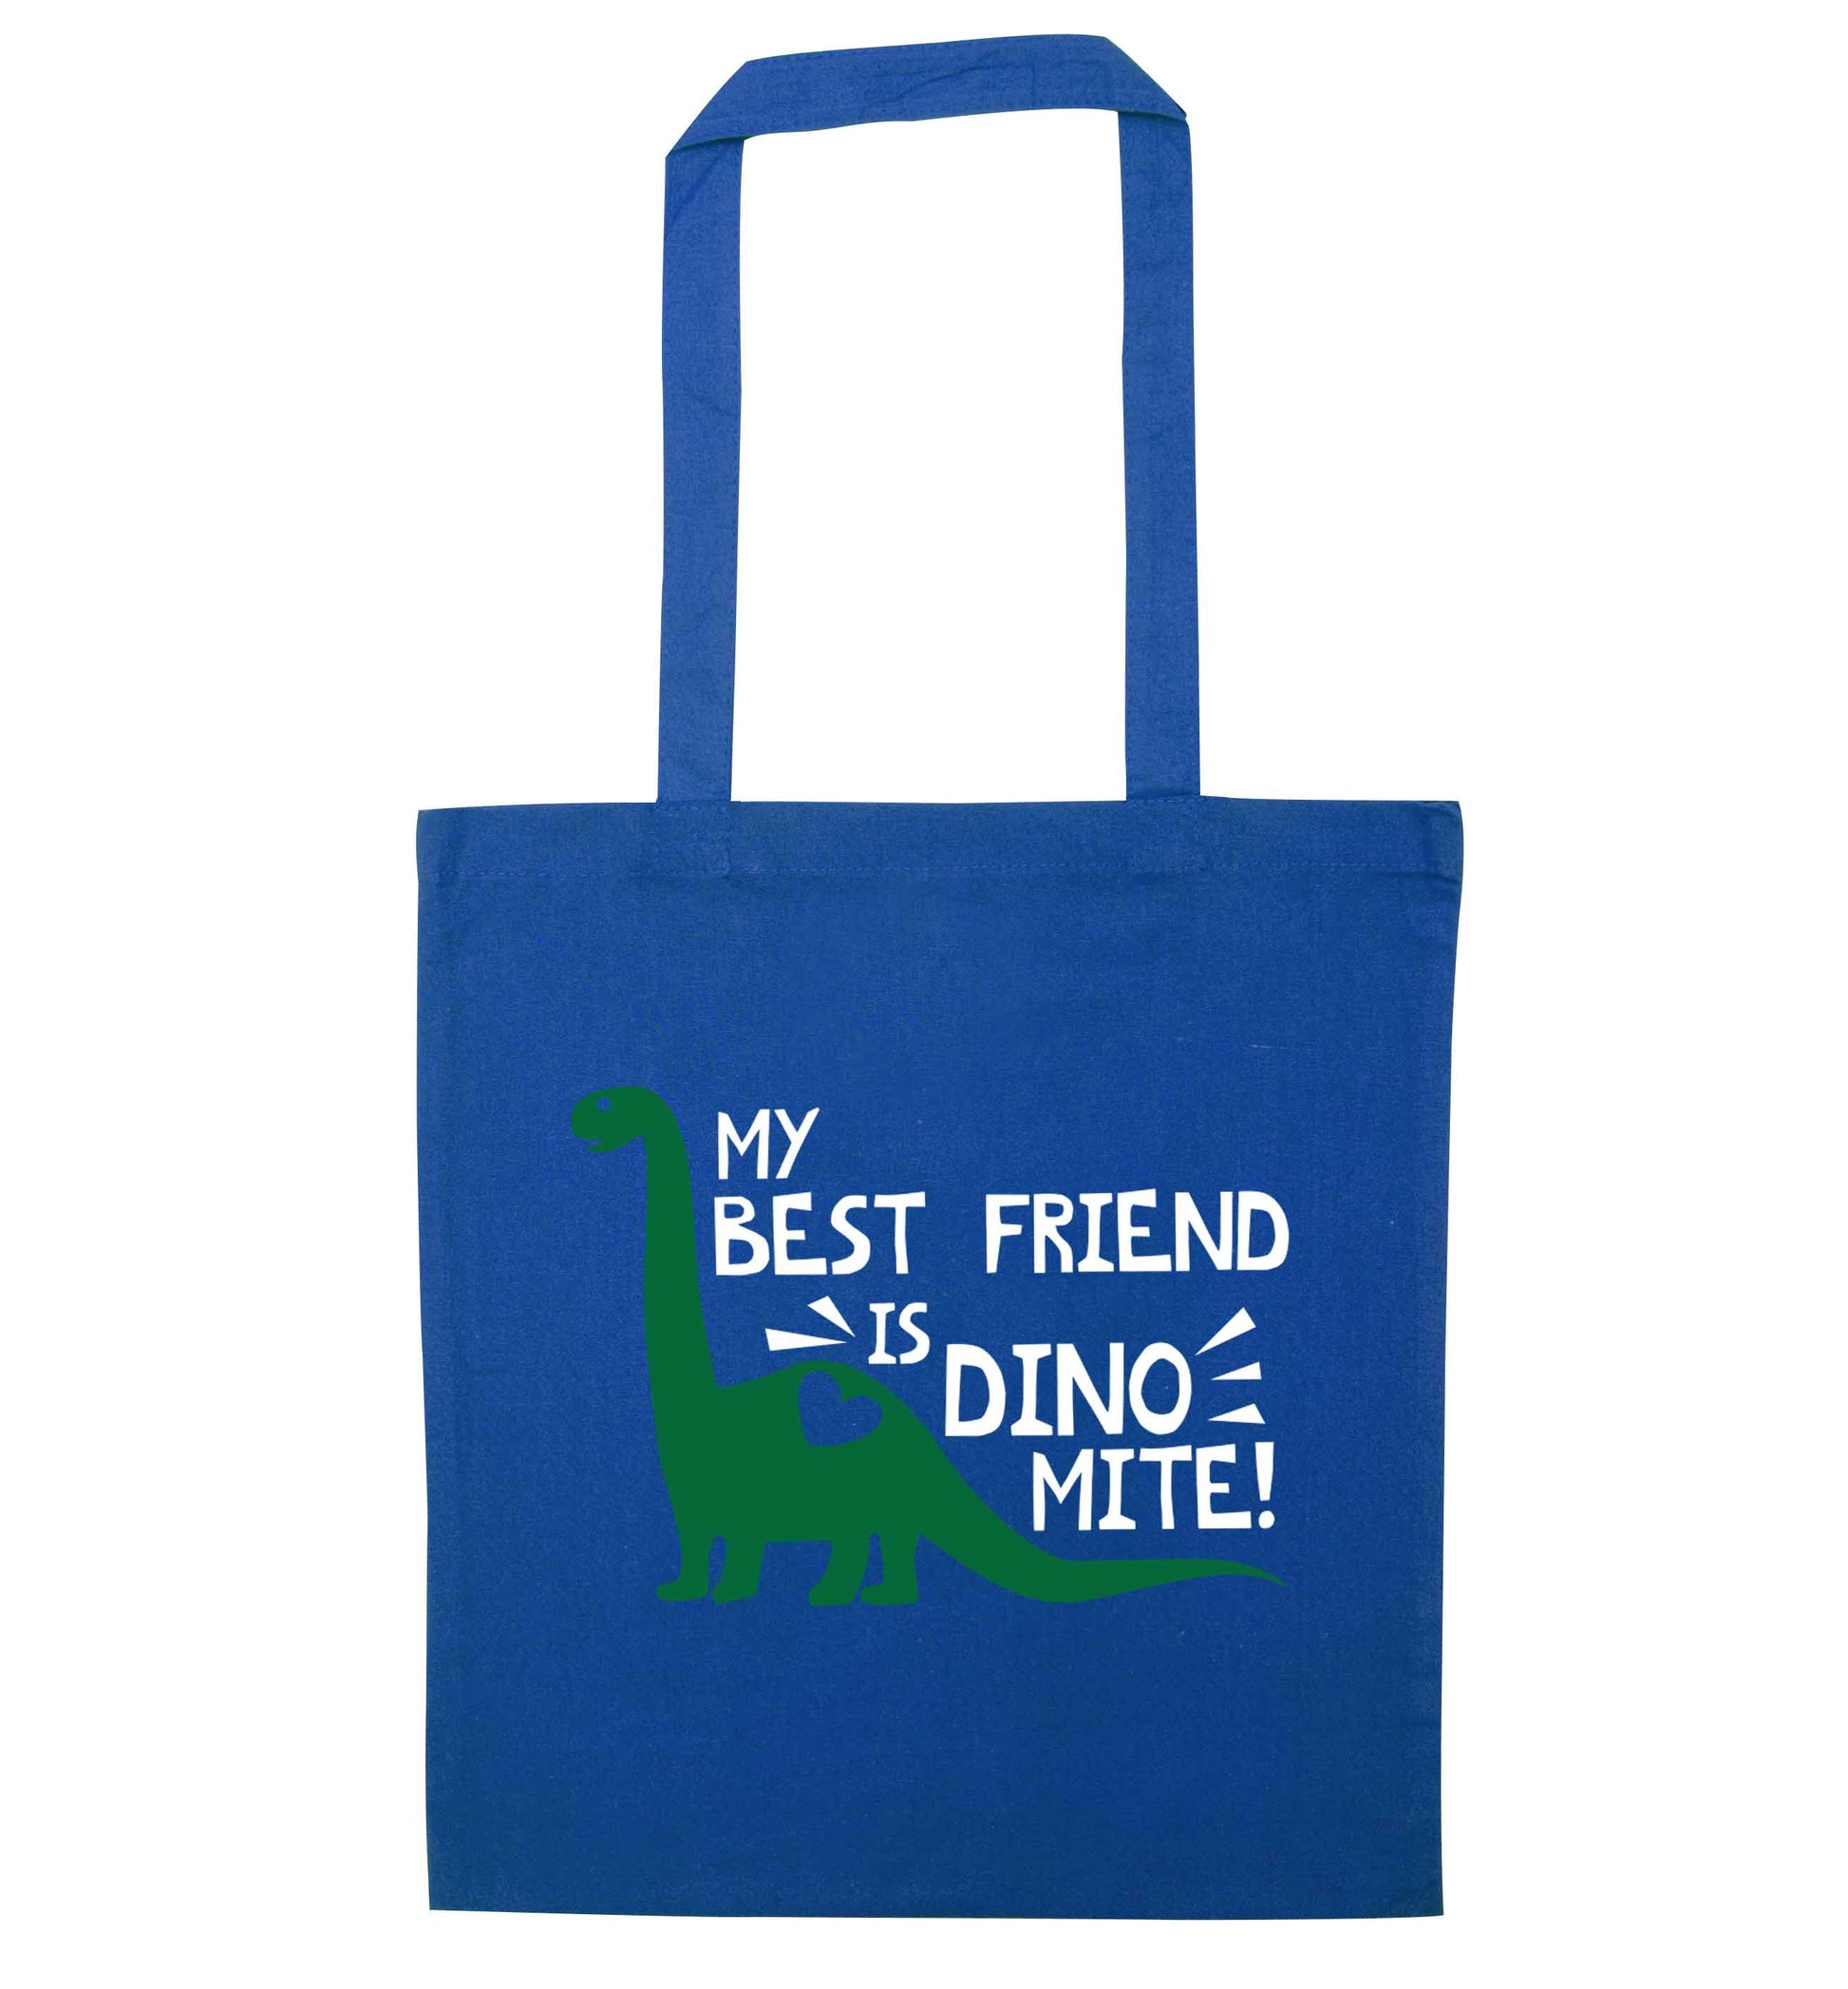 My best friend is dinomite! blue tote bag